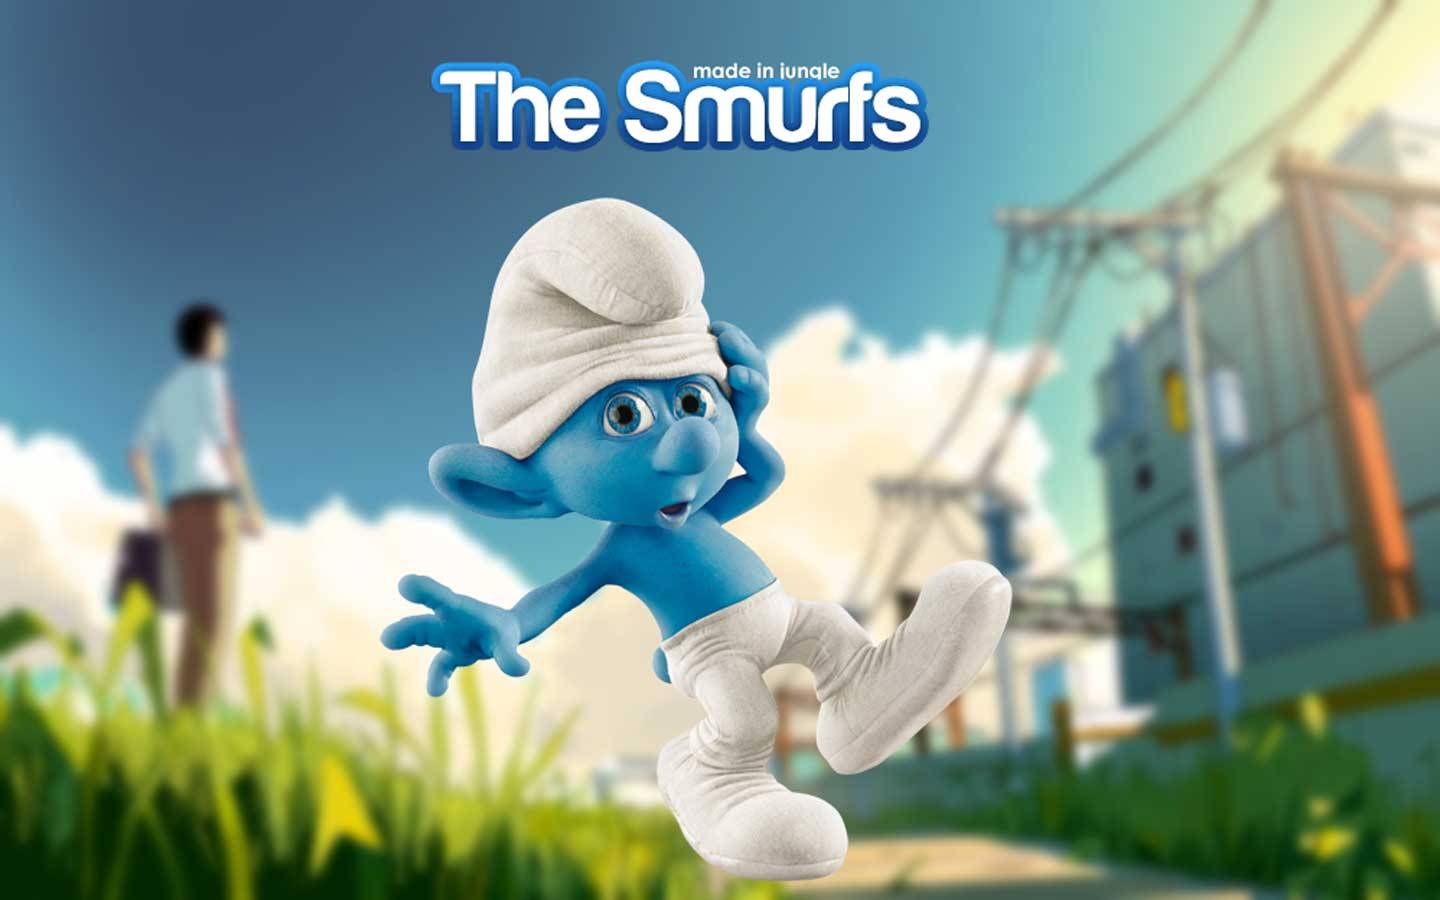 The Smurfs - The smurfs Wallpaper